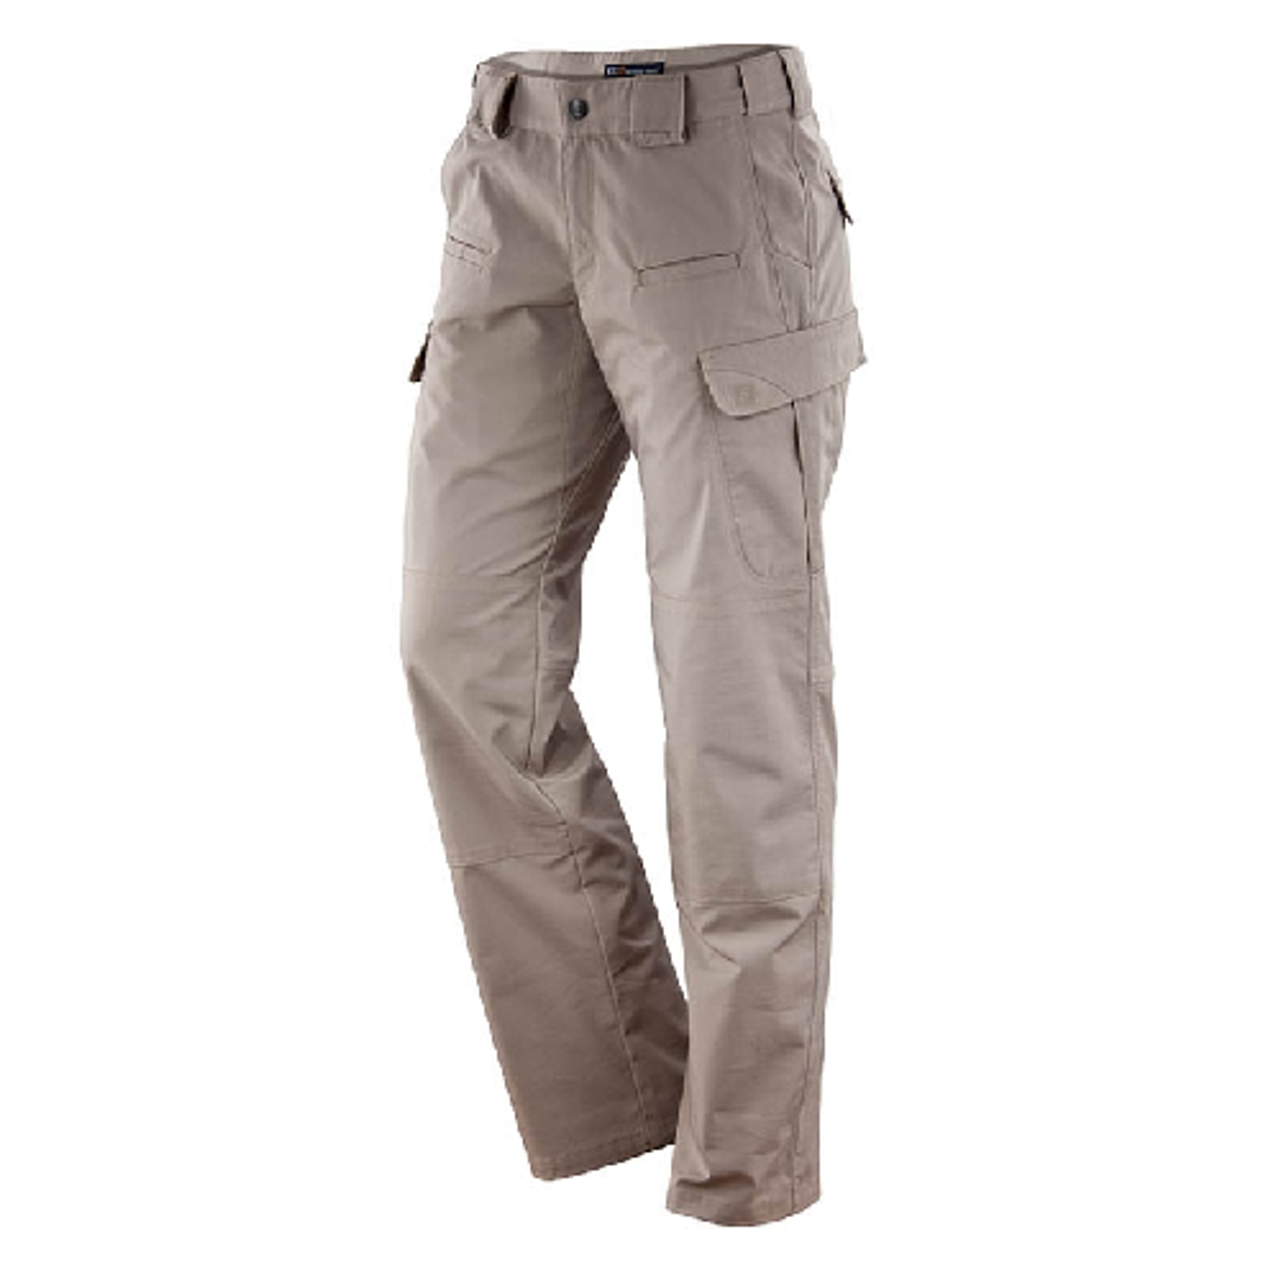 US BDU Trousers. Tri Desert Camouflage Combat Pants